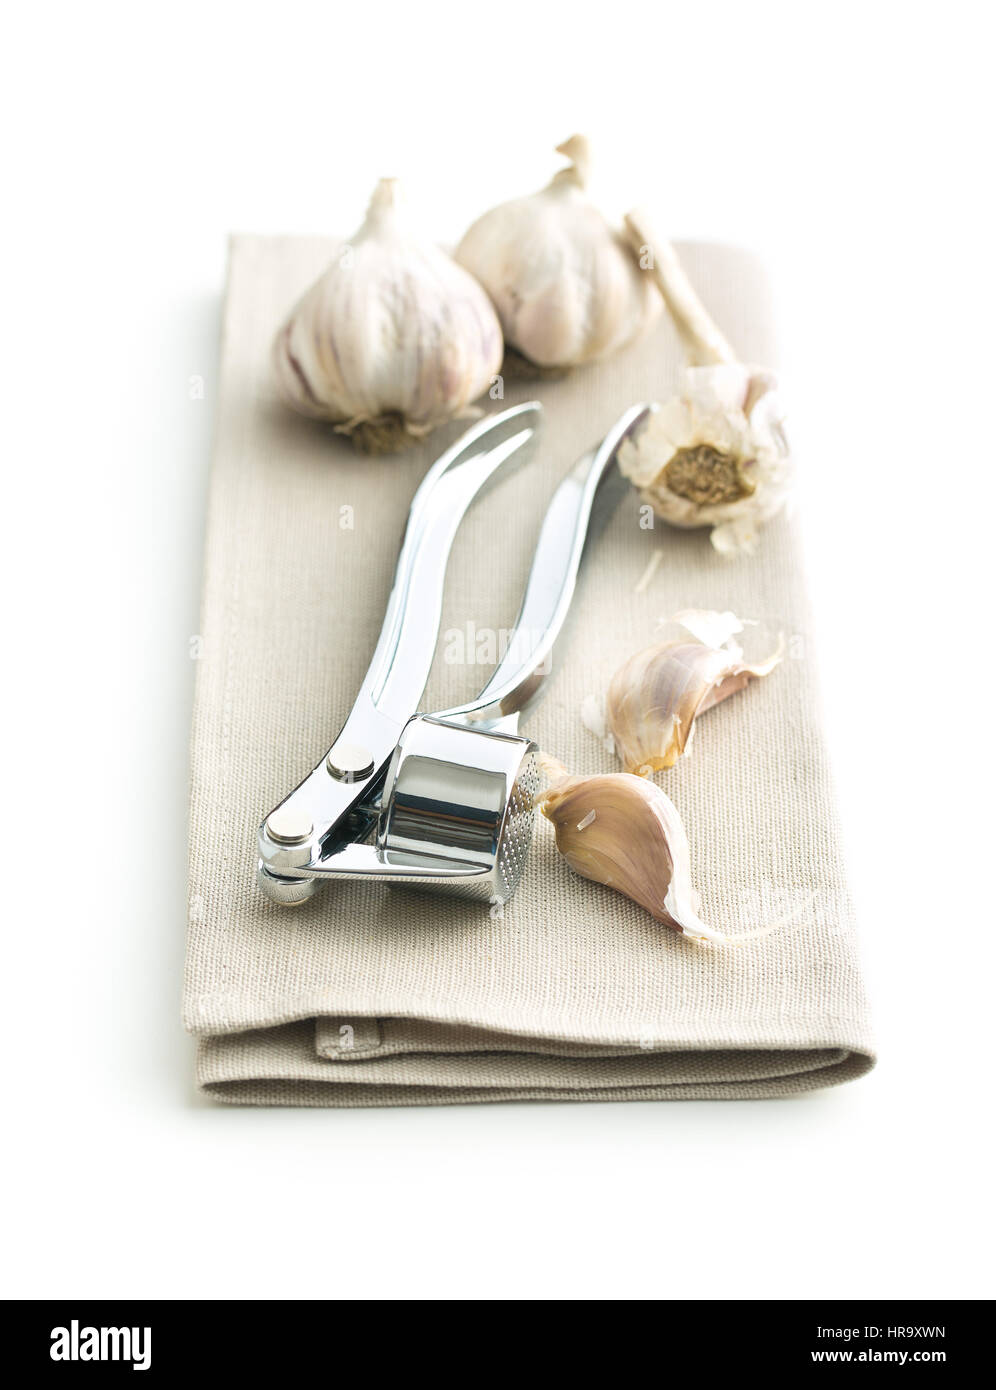 Garlic and garlic press on napkin isolated on white background. Stock Photo